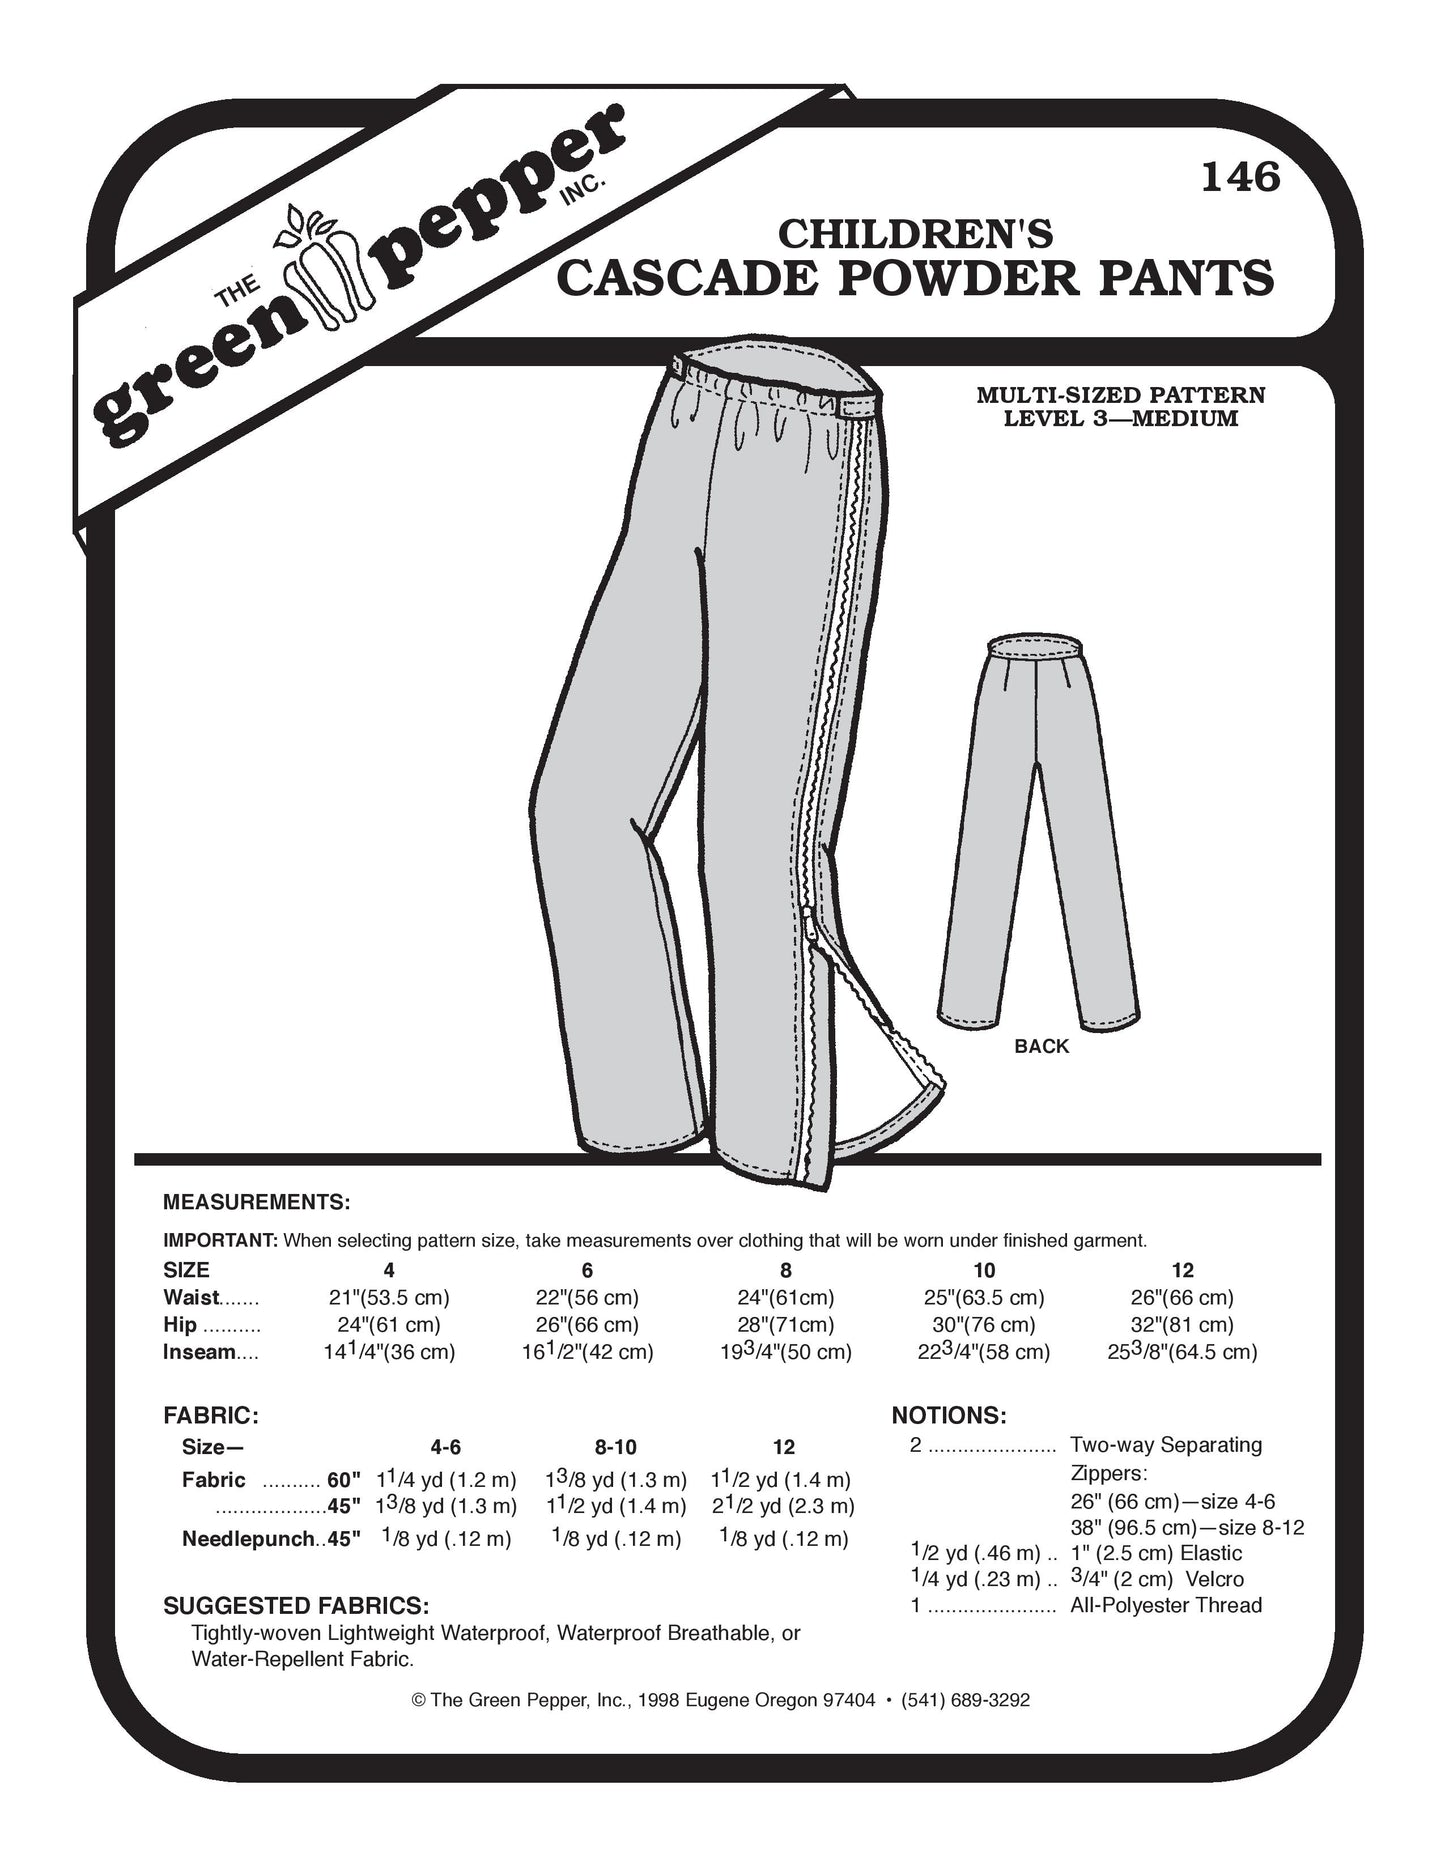 Patrón de pantalones de polvo en cascada (se vende por cada uno)